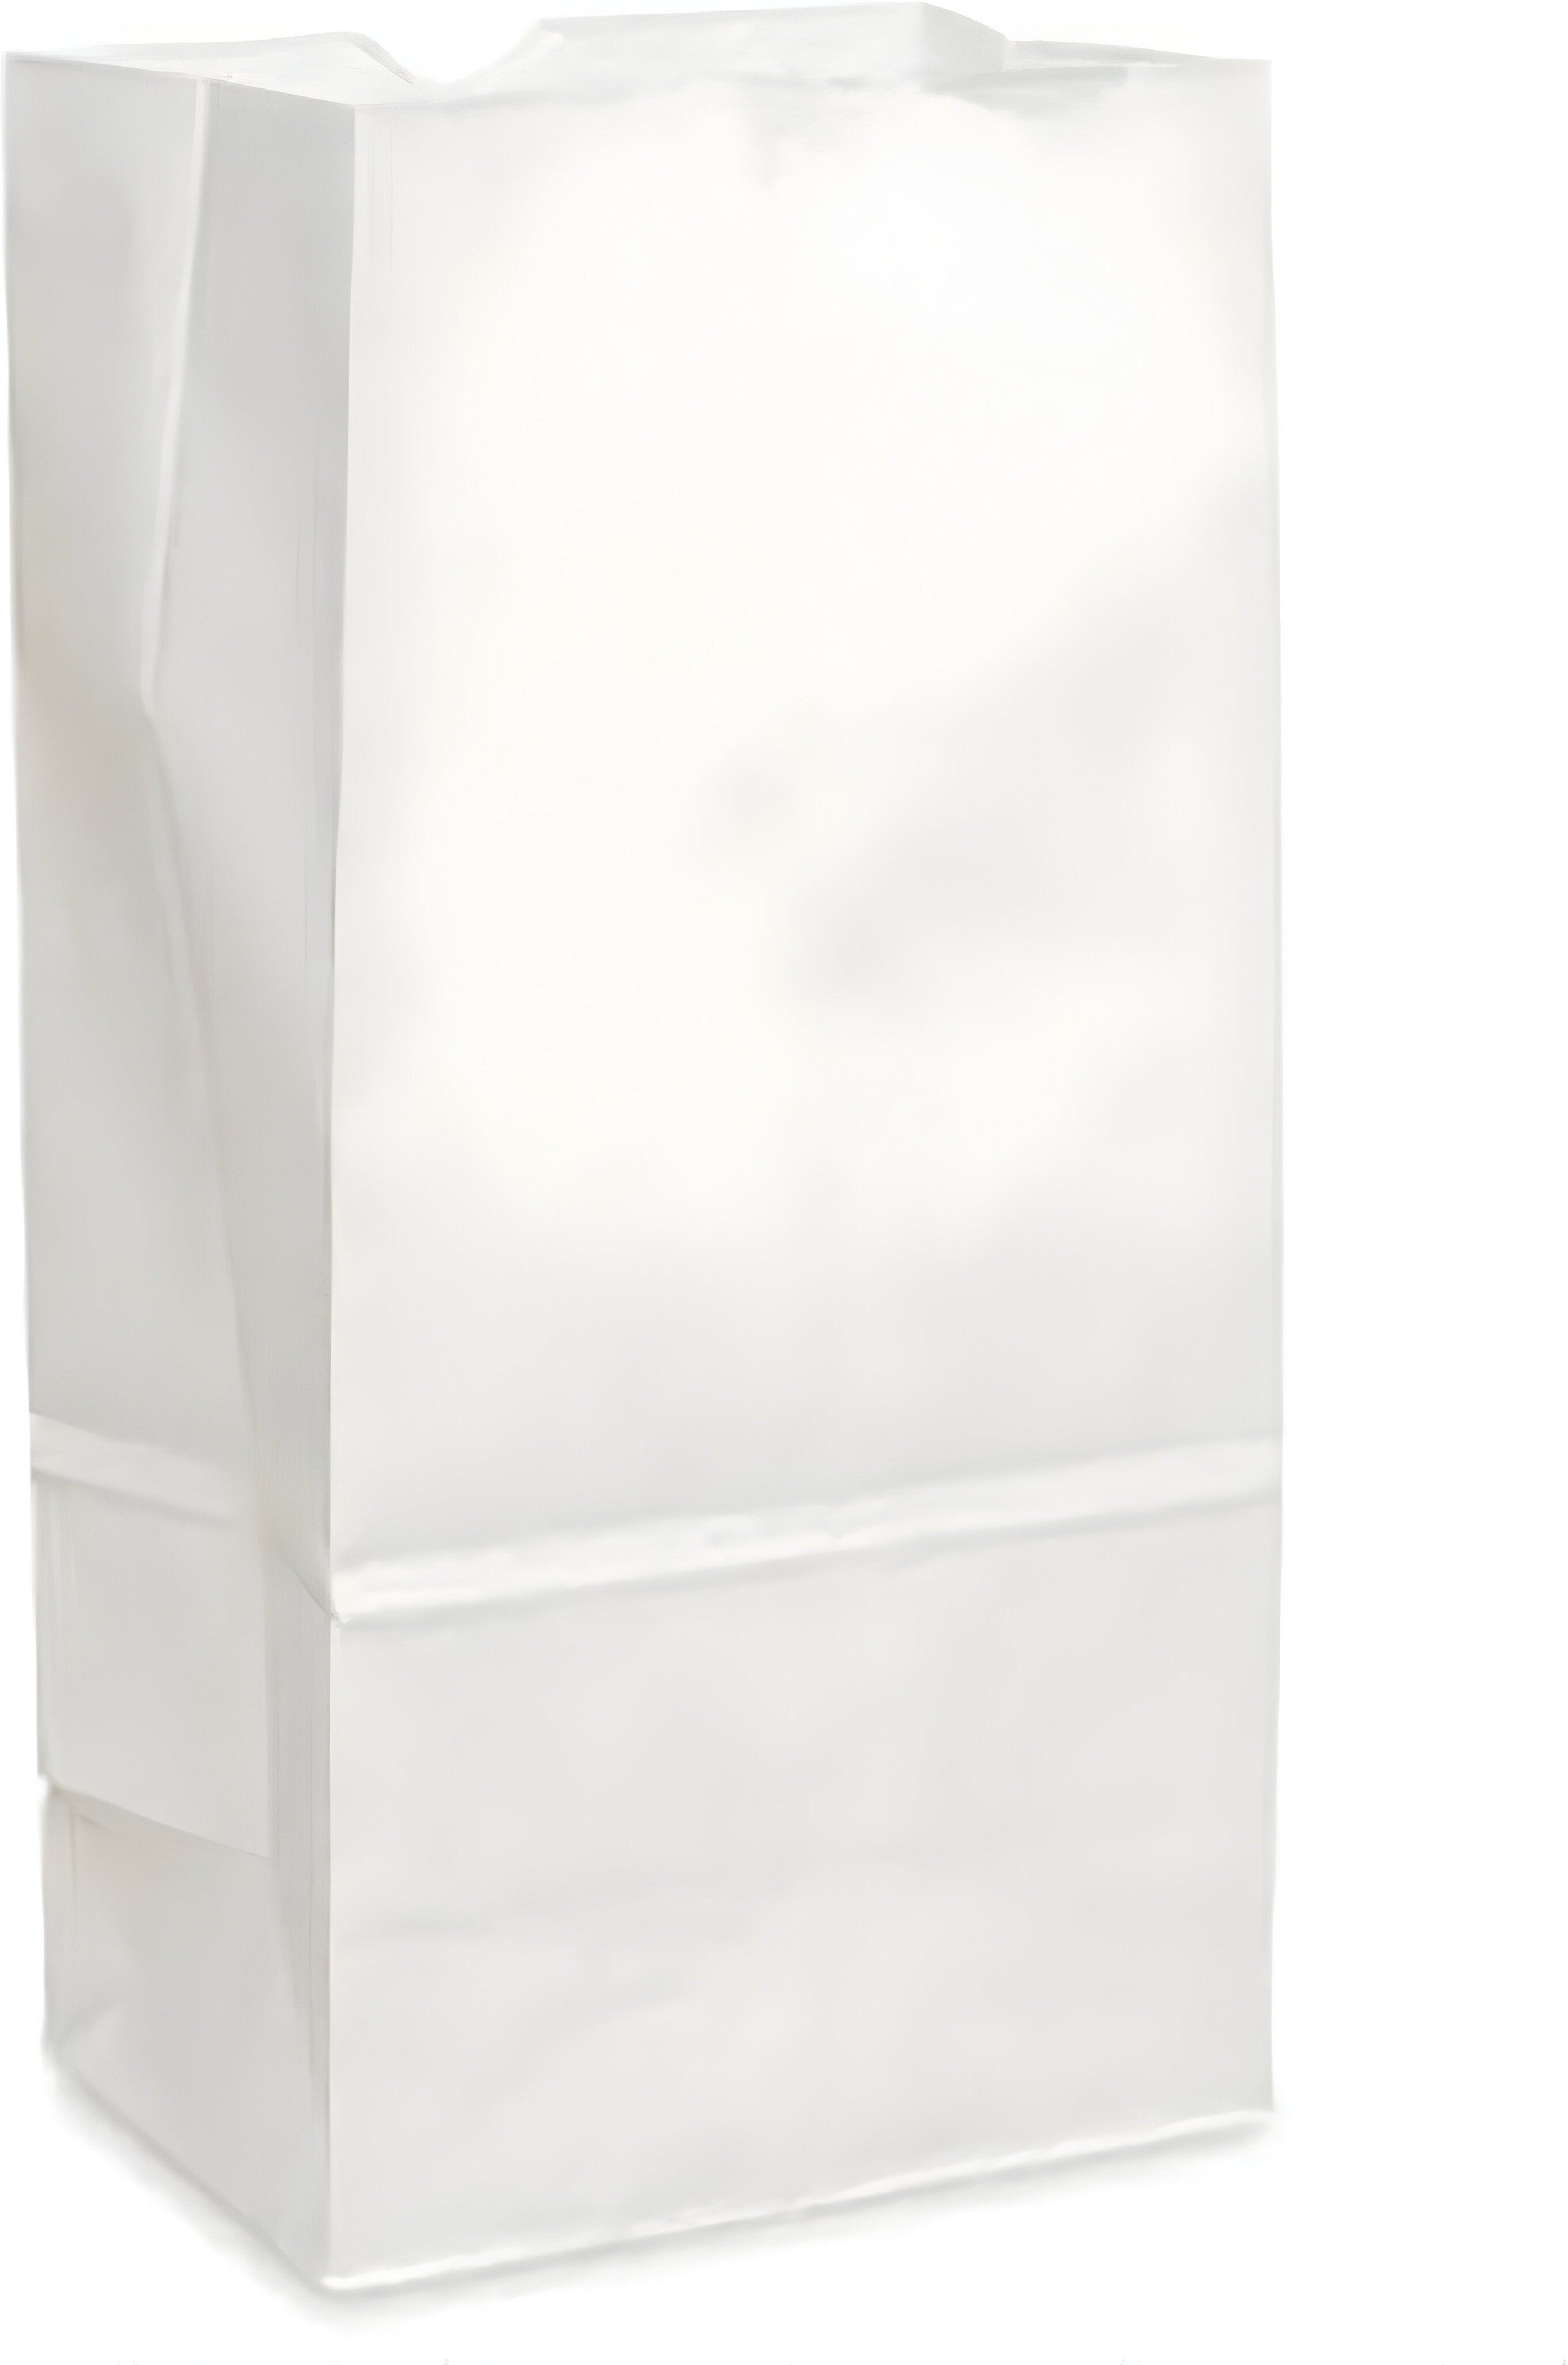 Atlas Paper Bag - 6 lb White Paper Bags, 500/Bn - 4060026